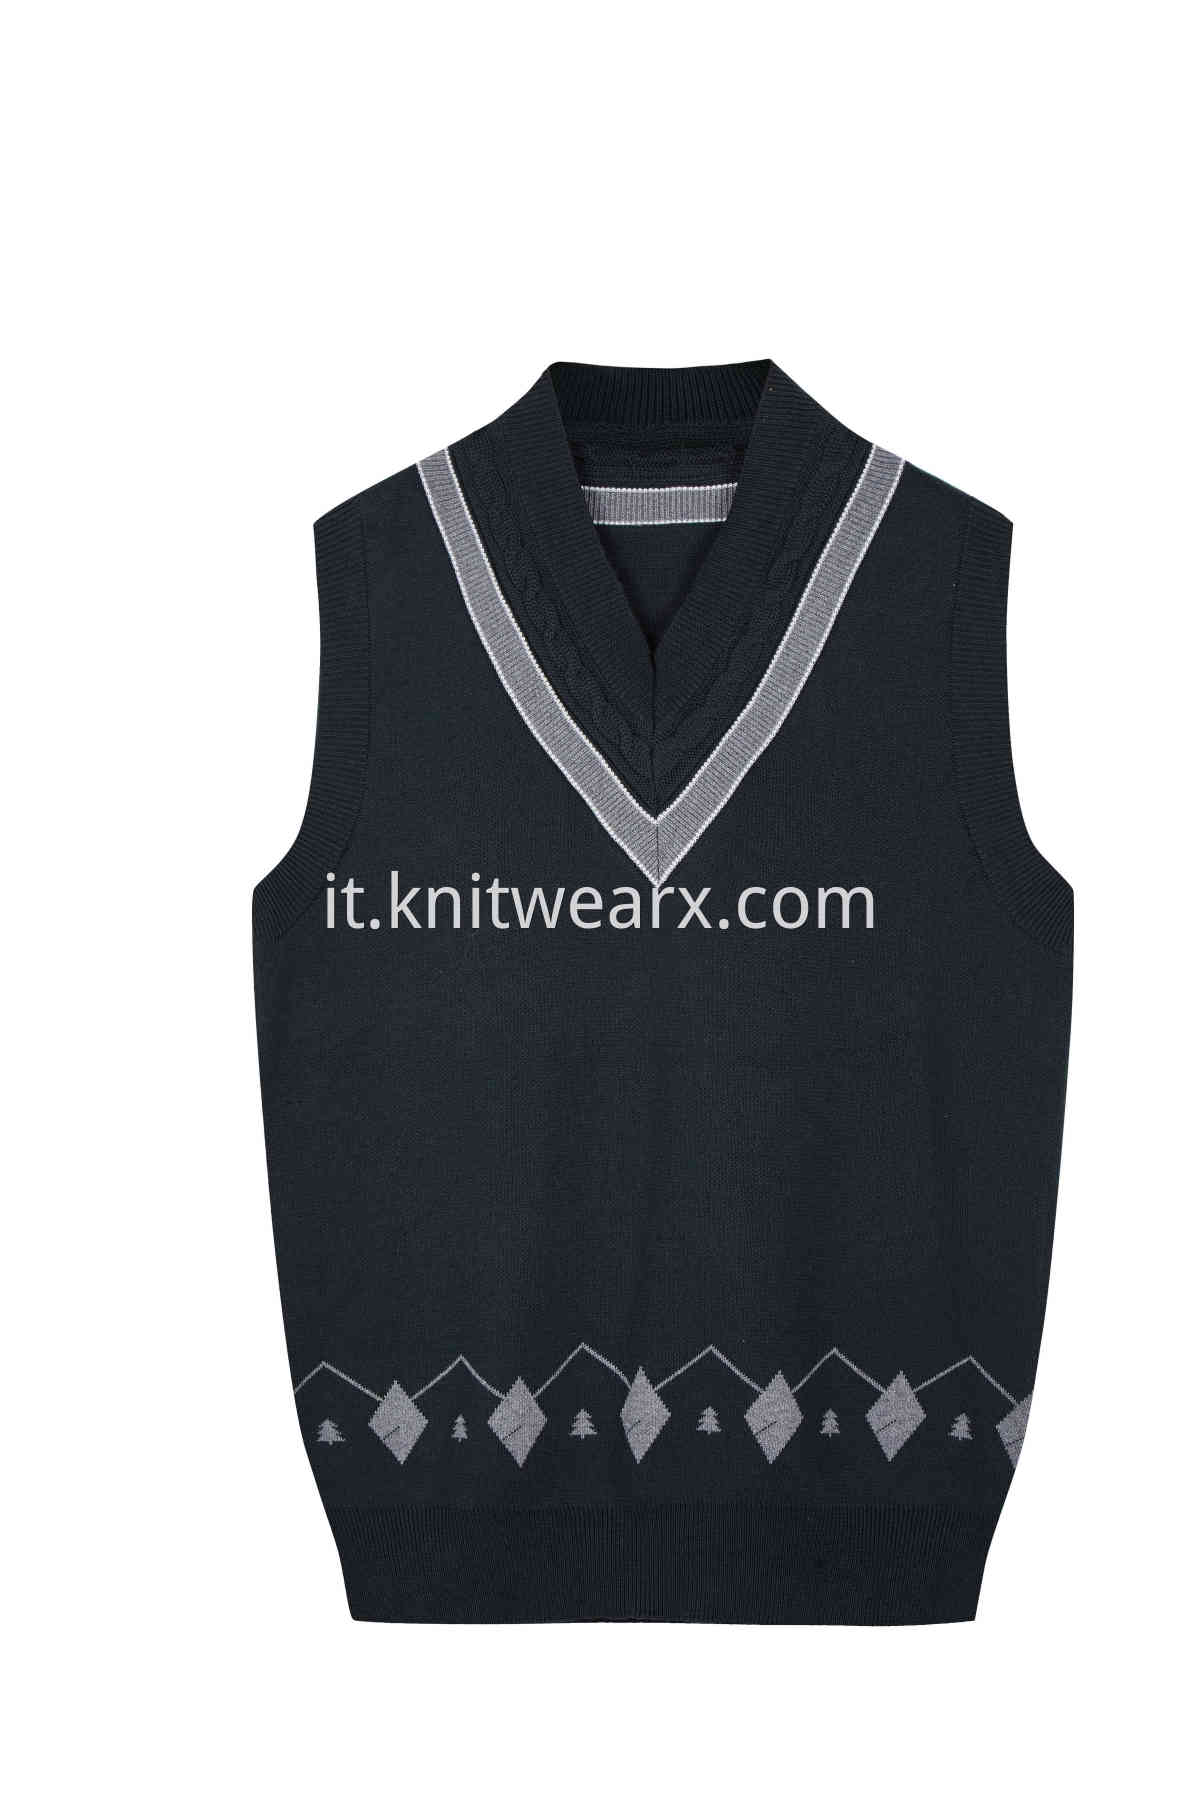 Kids's Sweater layering Collar Vest Cotton V-neck School Uniform Pullover